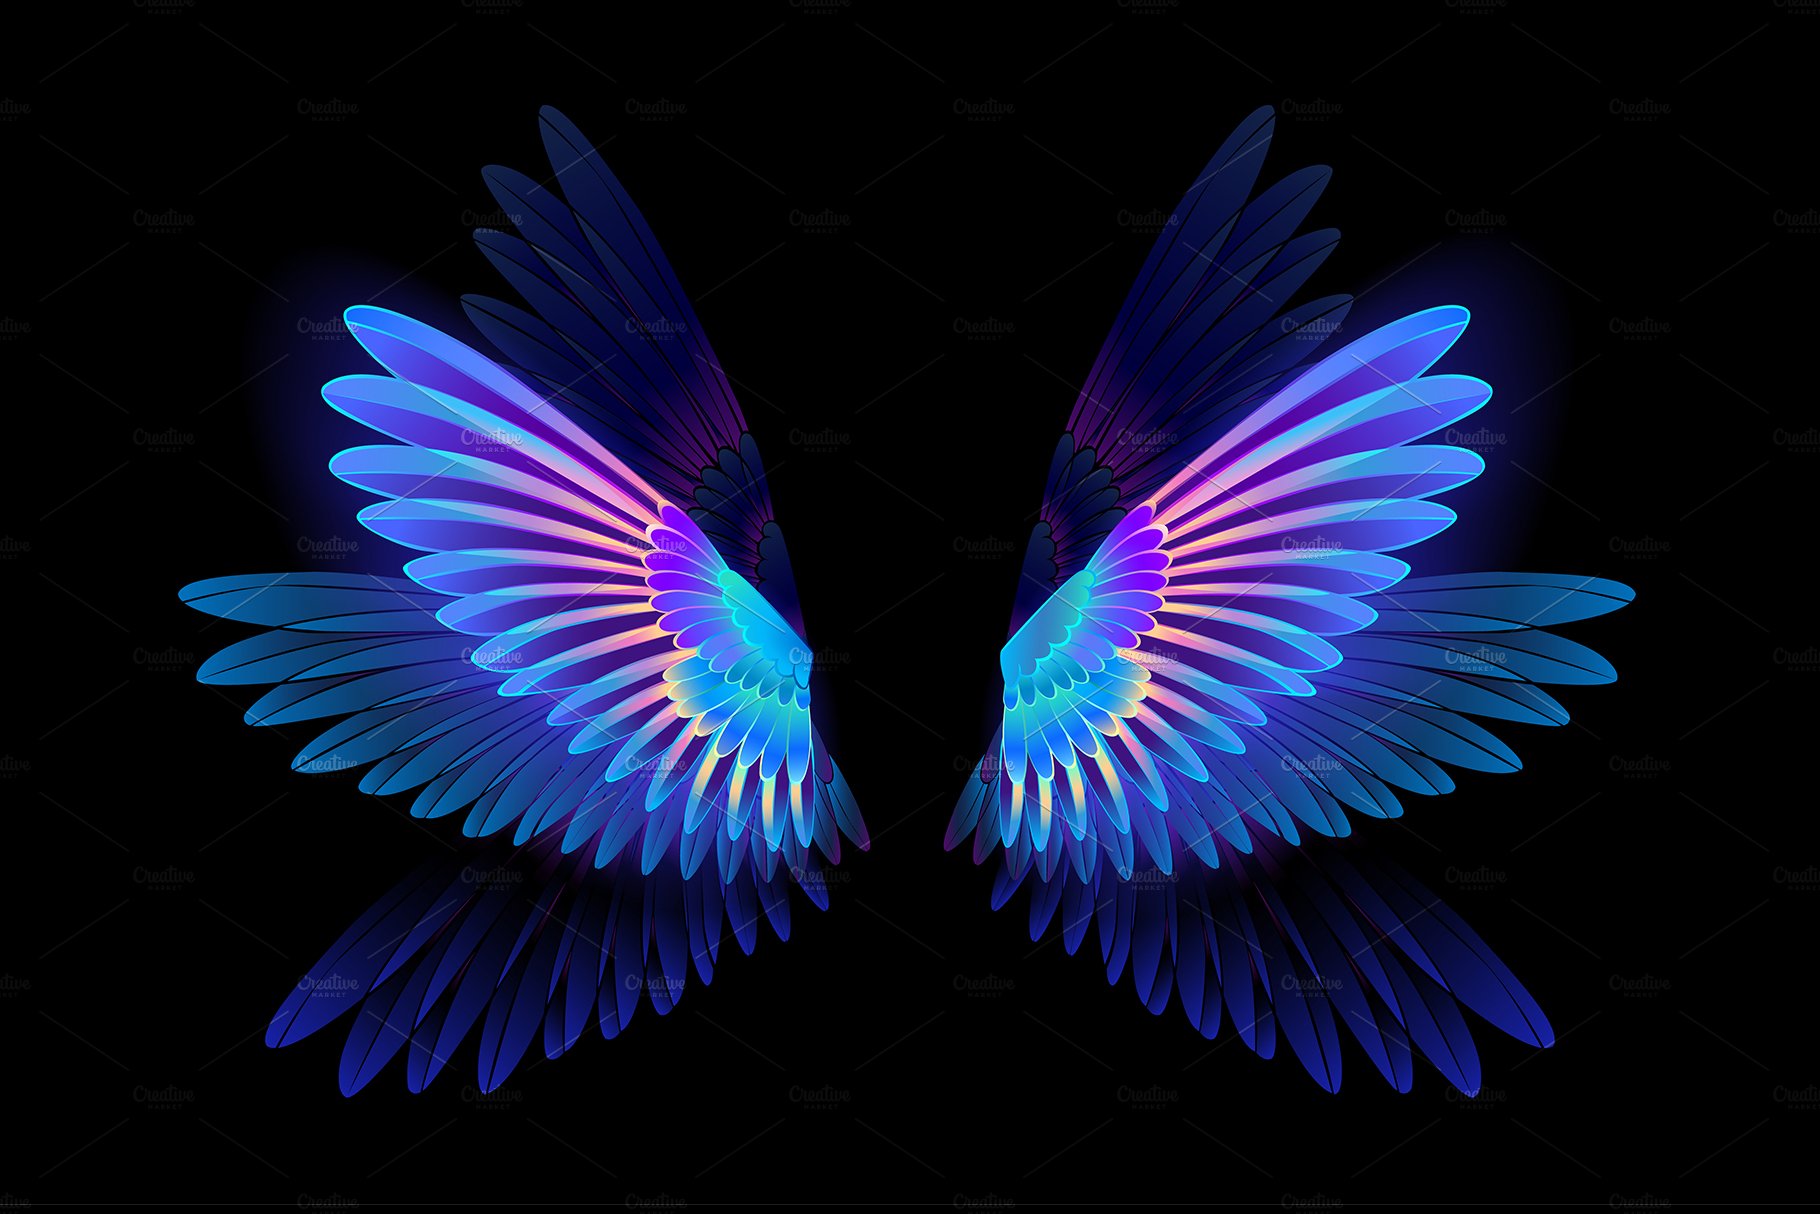 Glowing Hummingbird Wings cover image.